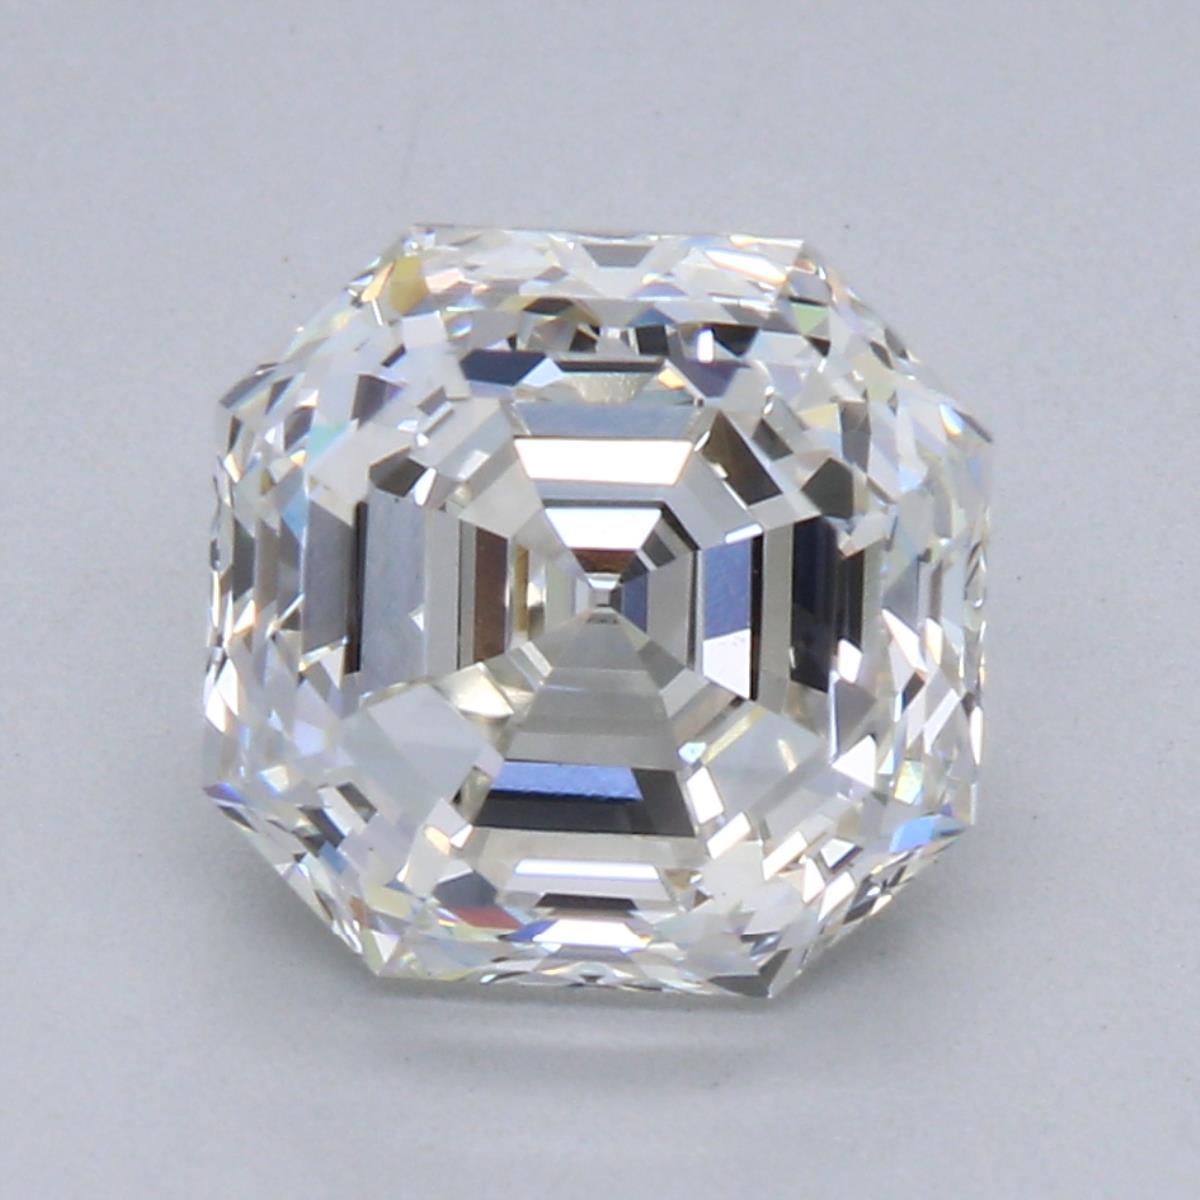 Cannock Ring - Estate Diamond Jewelry